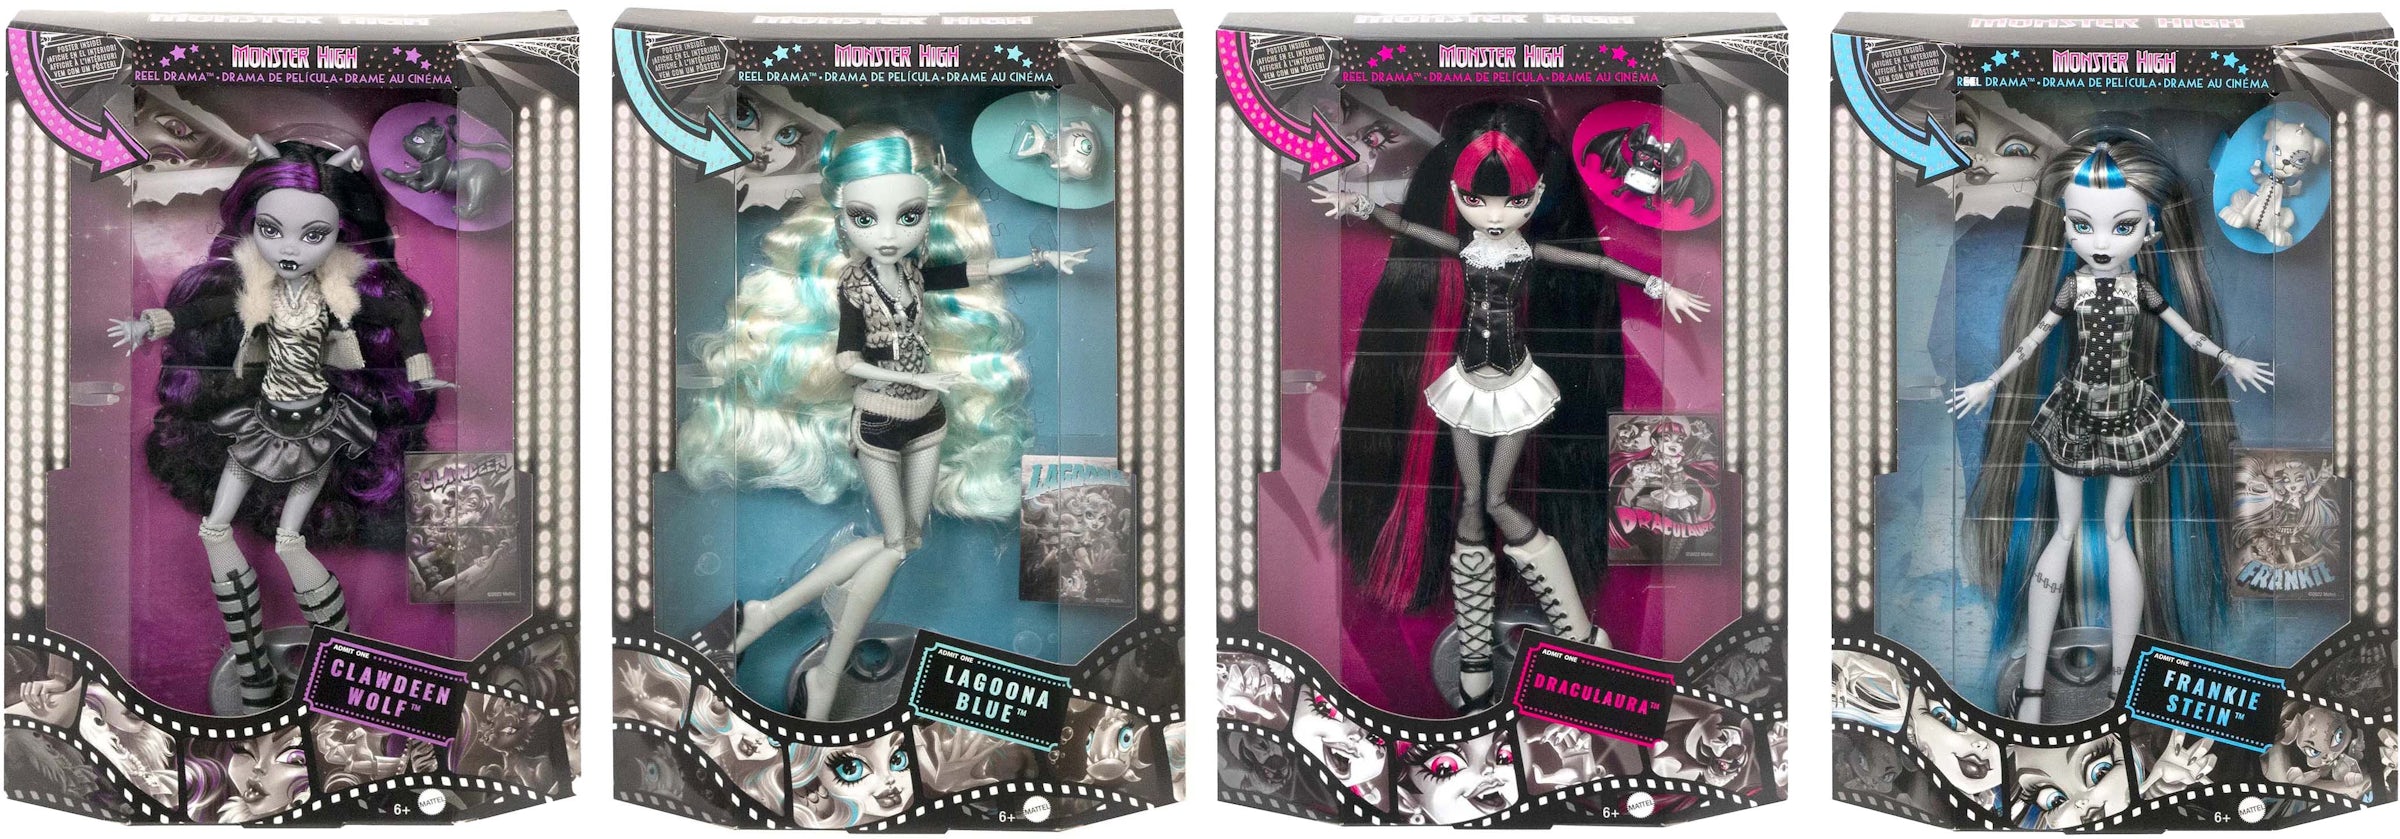 Mattel Monster High Reel Drama Frankie Stein Doll - FW22 - US